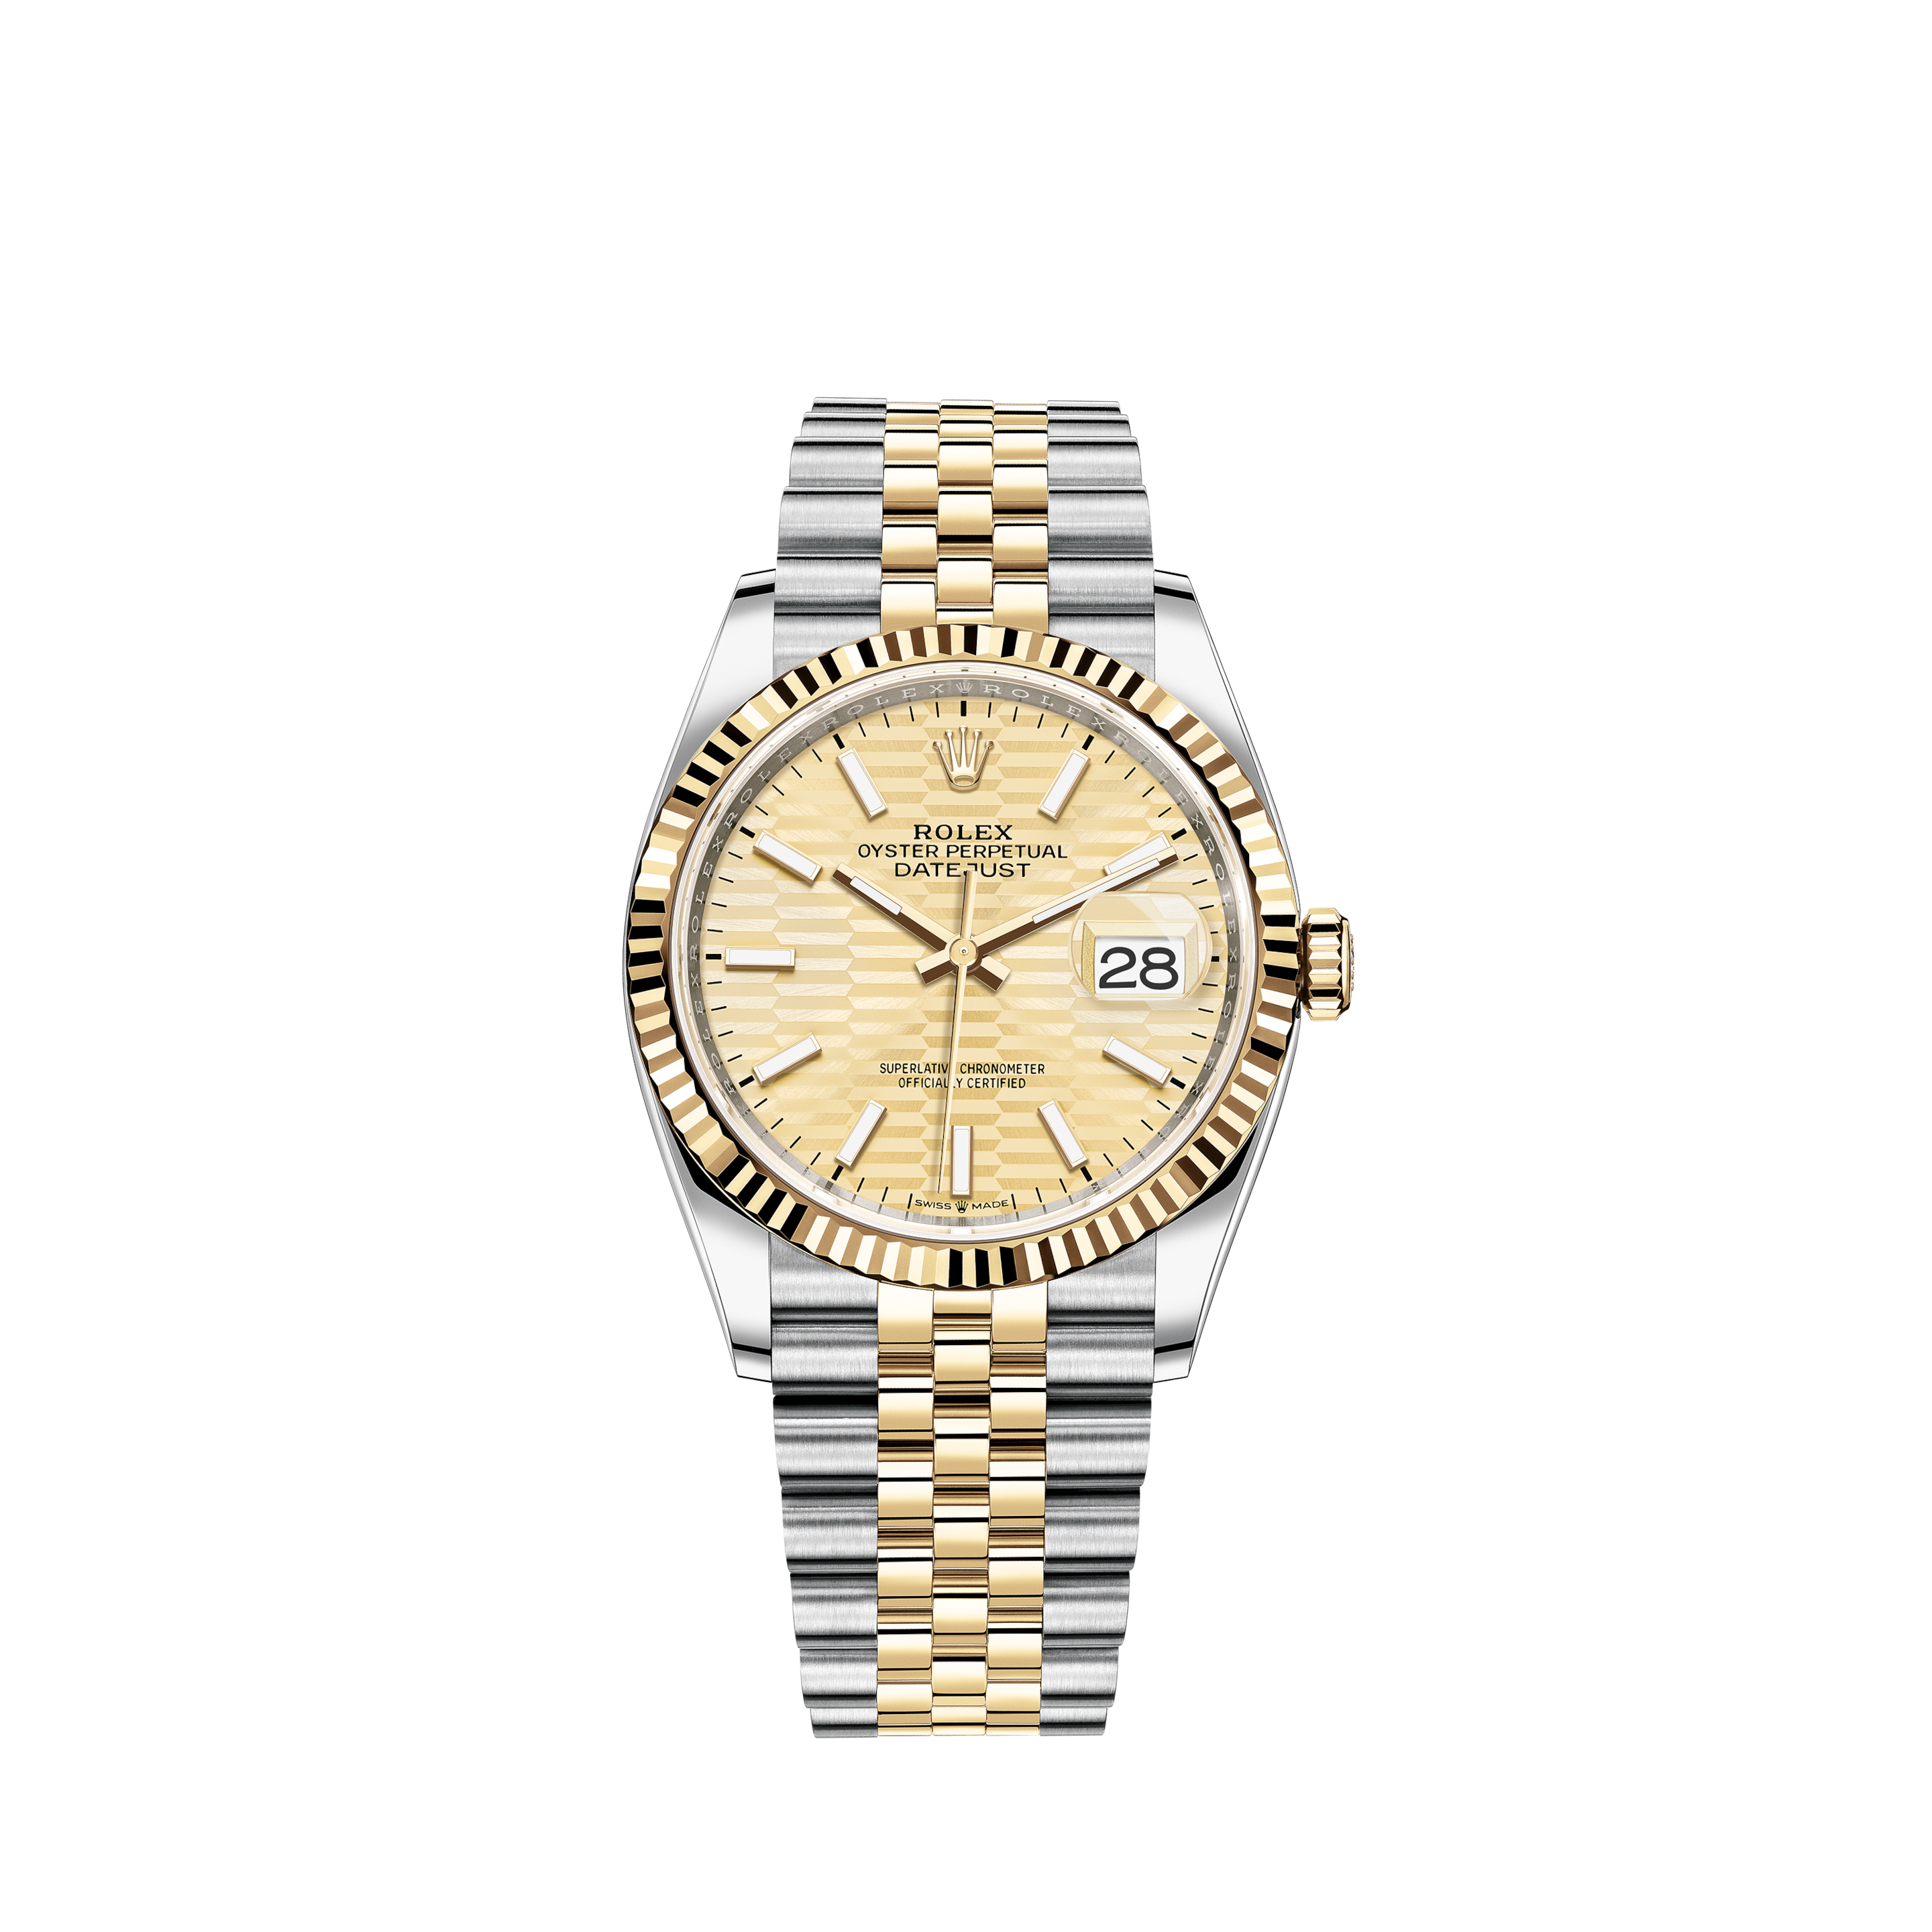 Rolex Lady Datejust 18K Gold Automatic Women's Watch Oyster Perpetual Ref. 6901Rolex Lady Datejust 18K Gold Automatic Women's Watch Oyster Perpetual Ref. 6917